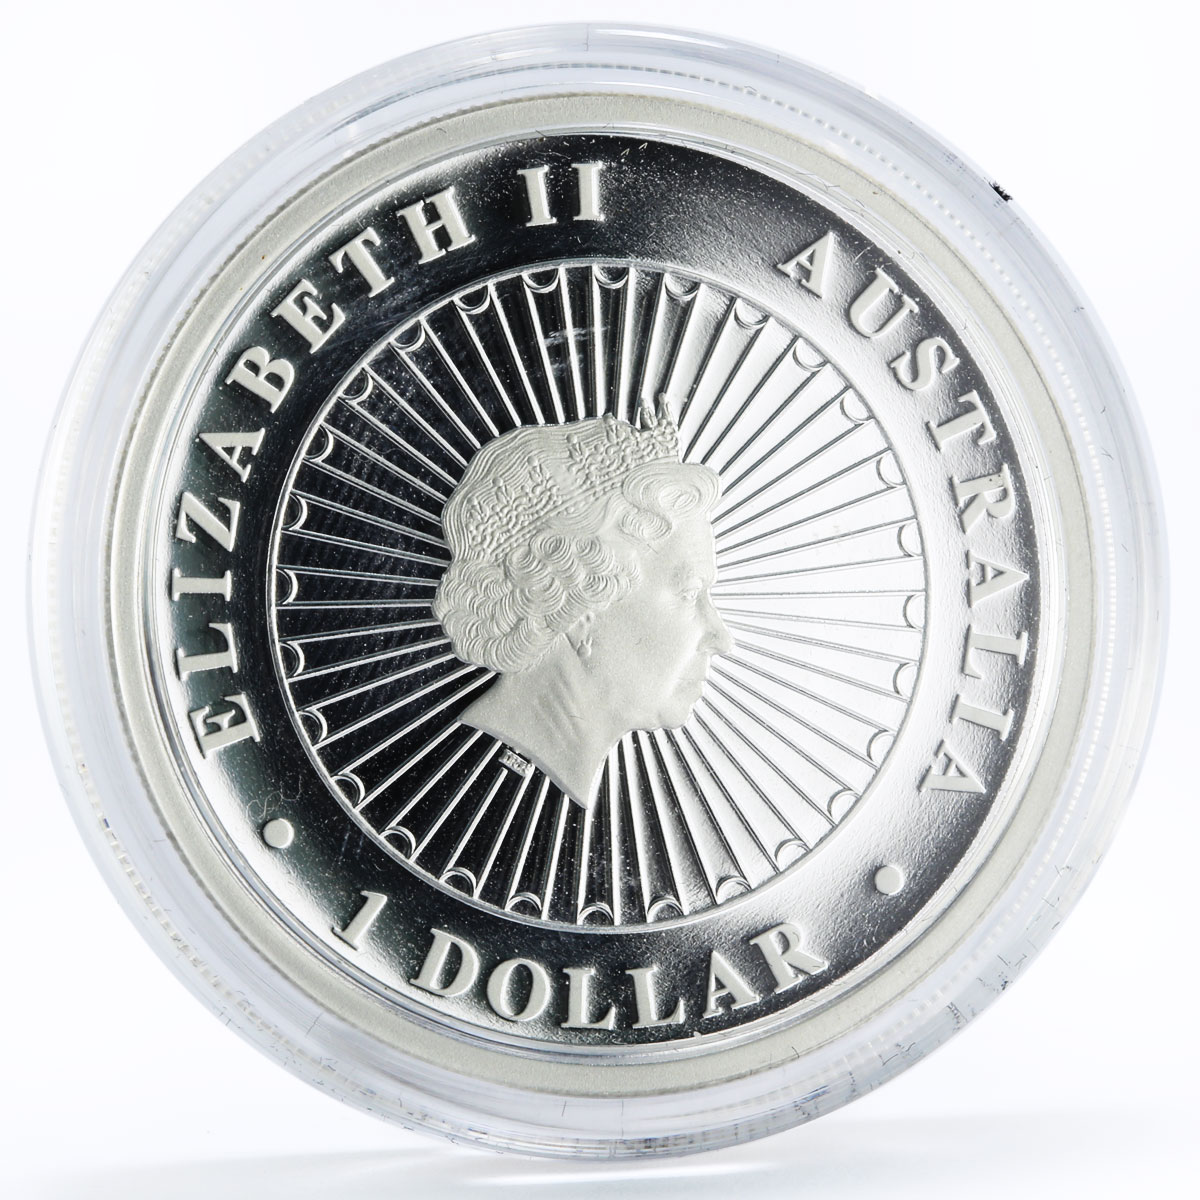 Australia 1 dollar Australian Opal series The Tasmanian Devil silver coin 2014